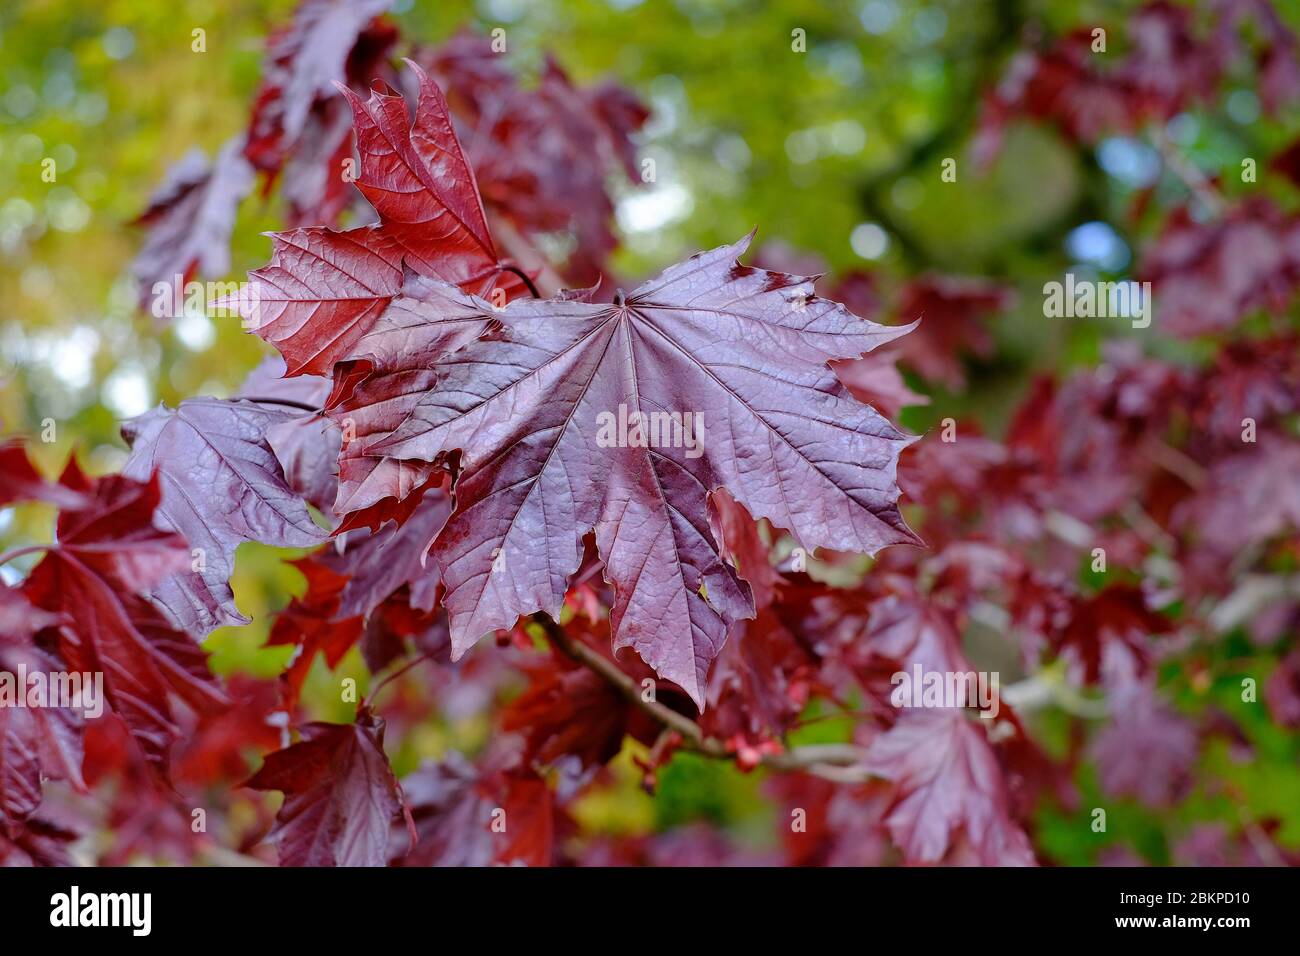 norway maple, crimson king red leaved tree, norfolk, england Stock Photo